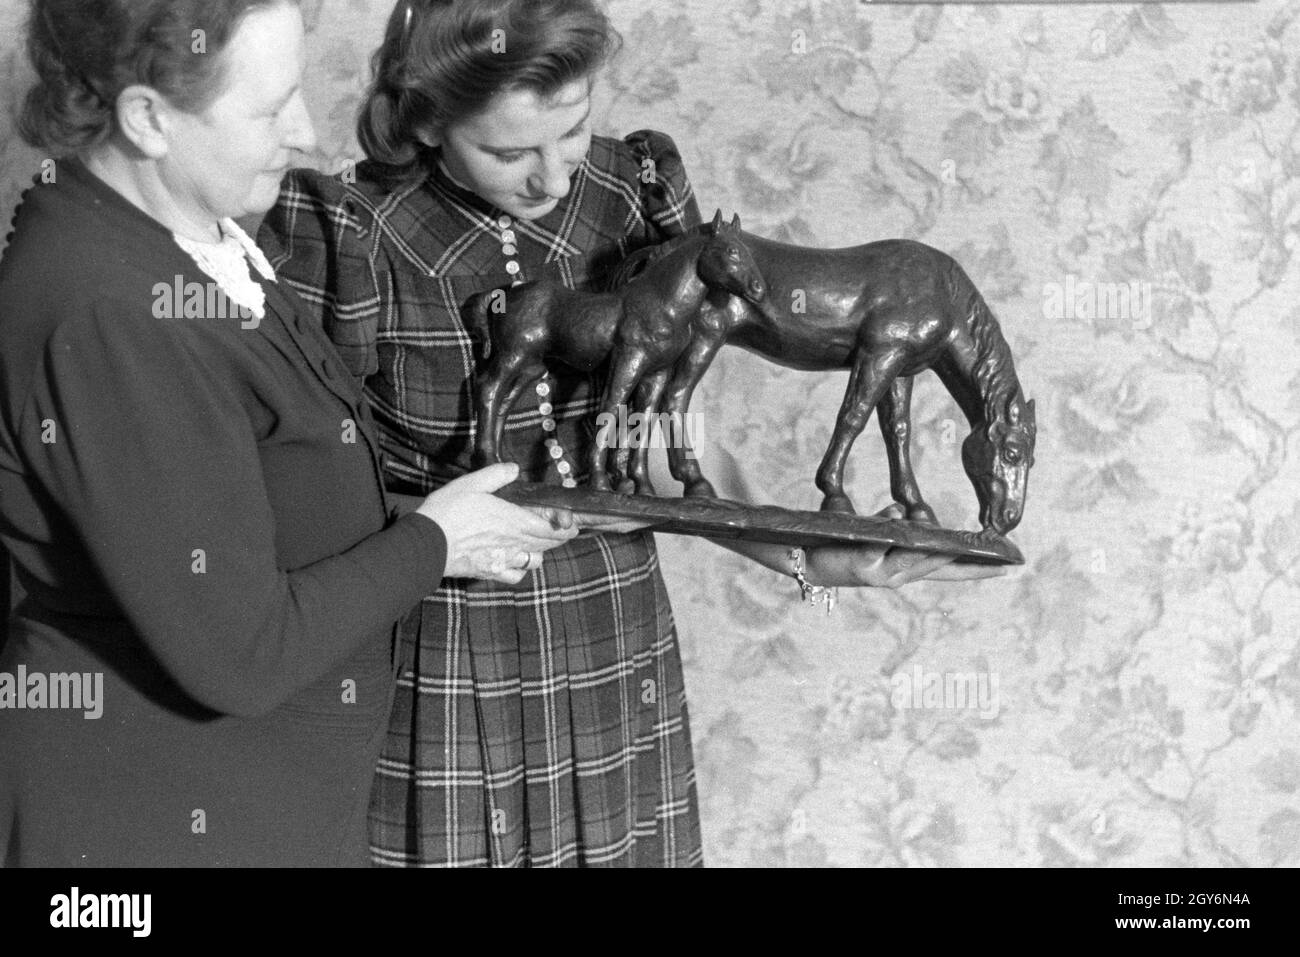 Die Weltmeisterin Anni Kapell bei ihrer Familie, Deutsches Reich 1941. Campione del Mondo Anni Kapell presso la sua famiglia, Germania 1941 Foto Stock